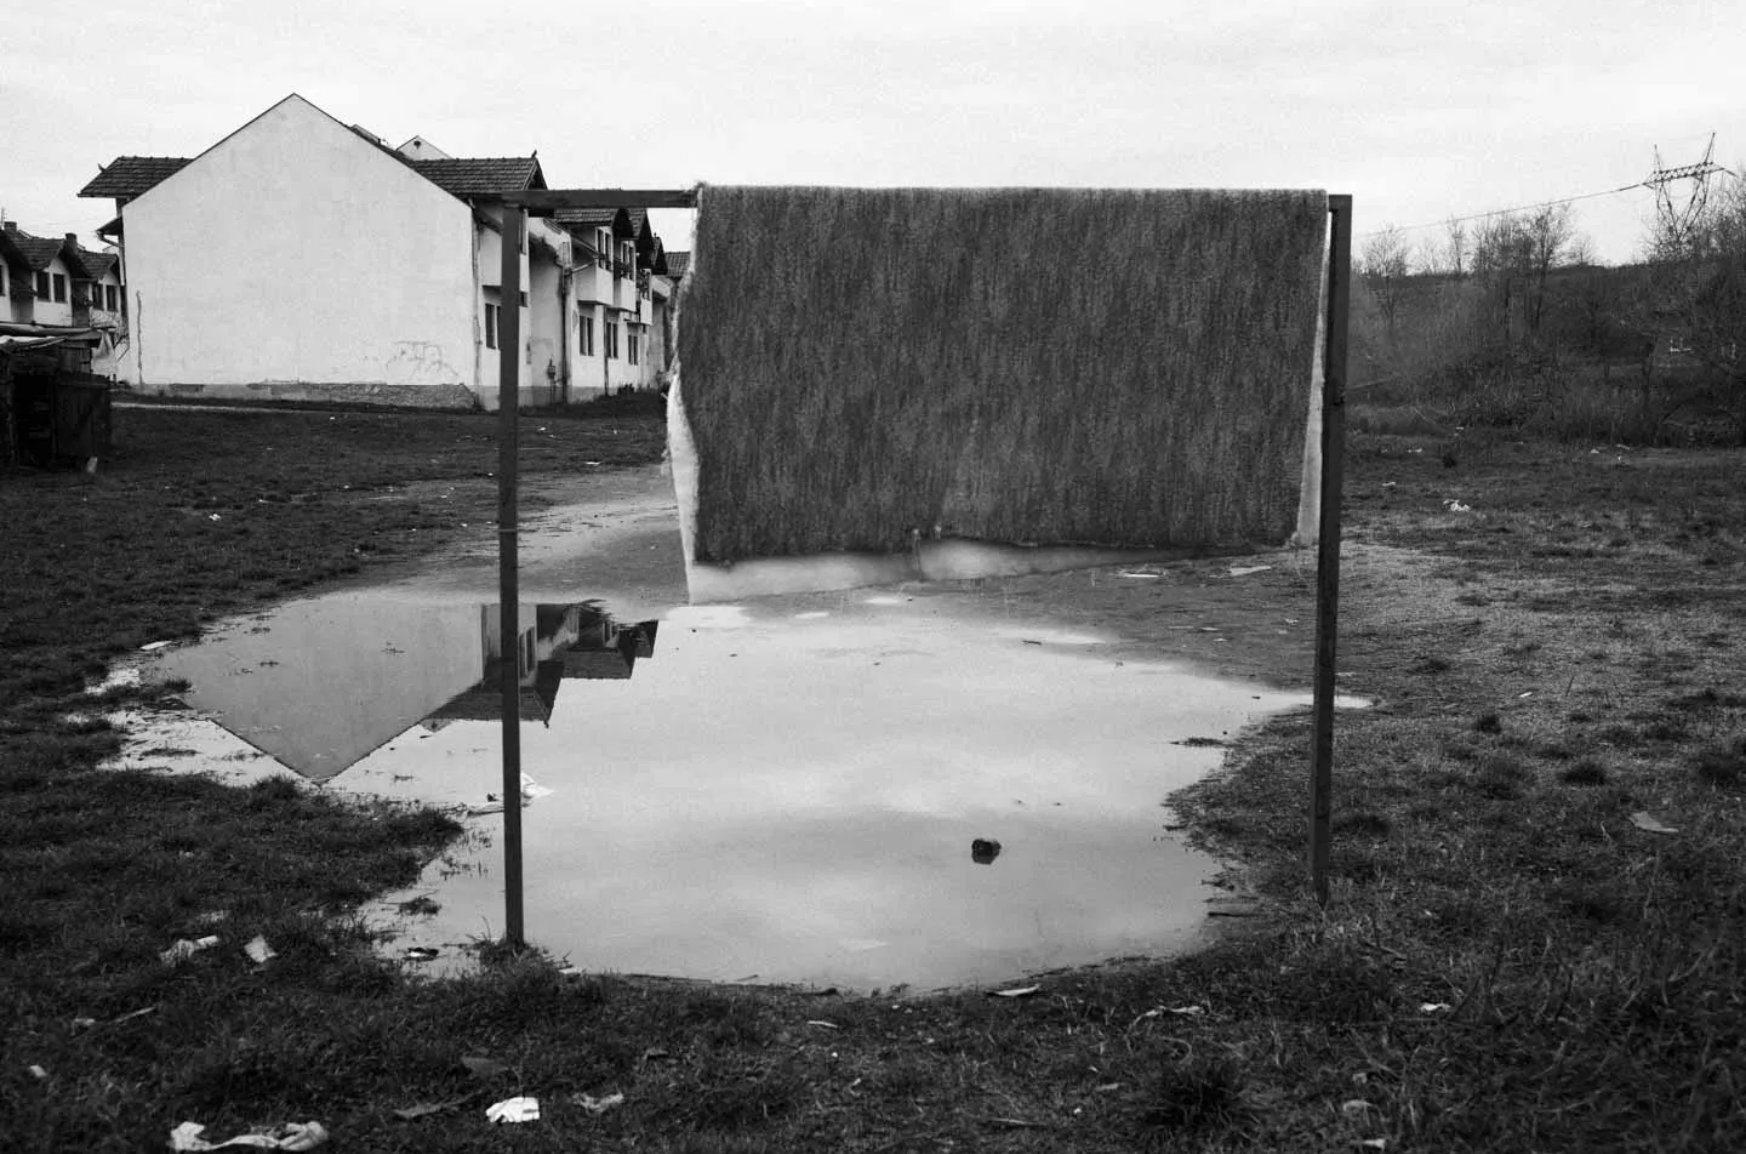 A scene in Visca refugee camp near Živinice. Image by Jošt Franko. Bosnia and Herzegovina, undated.